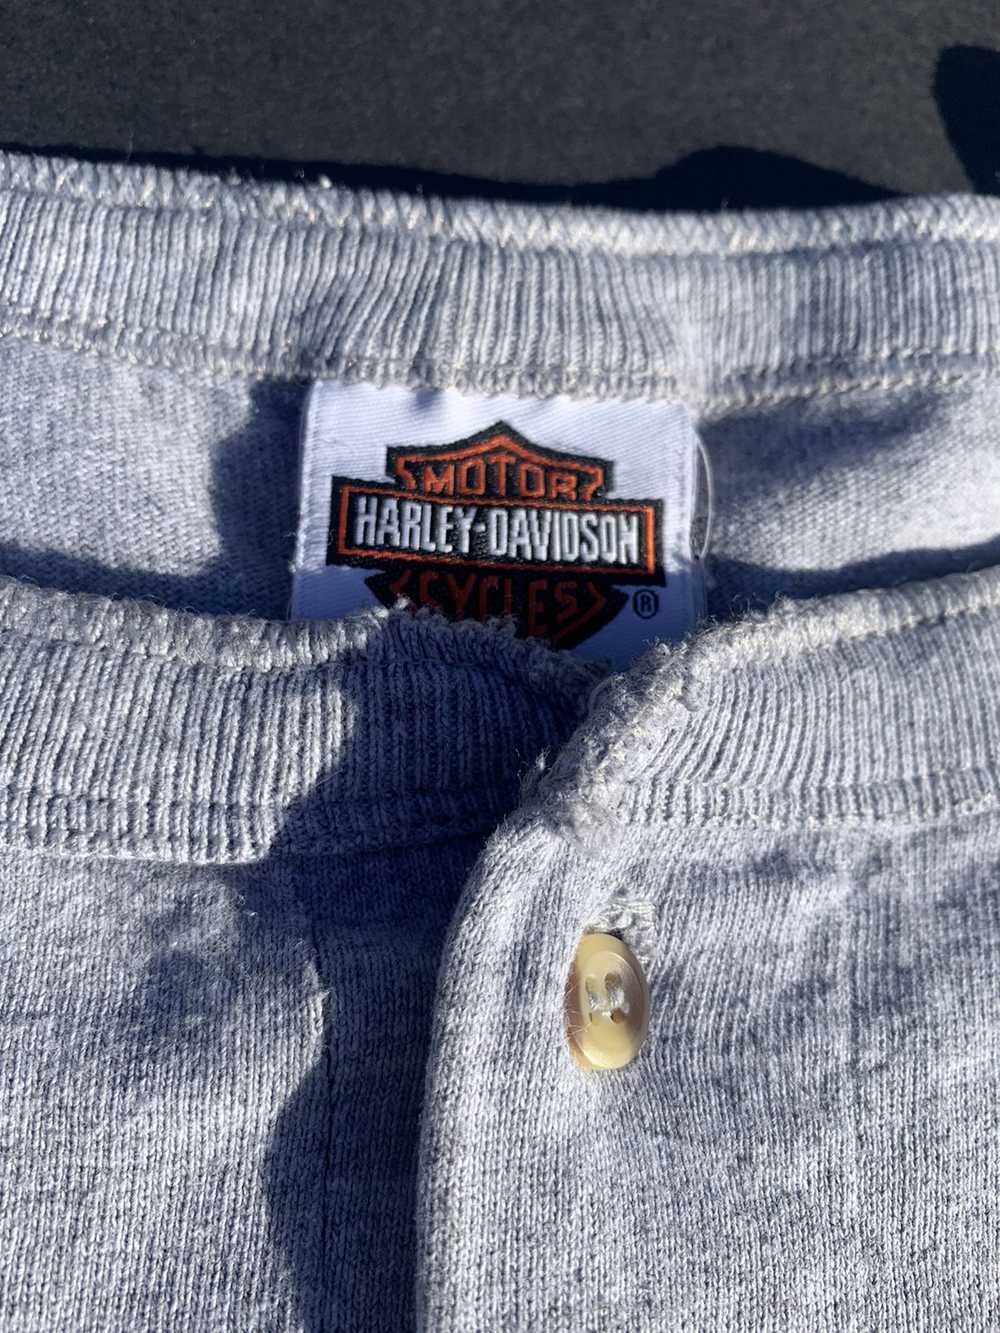 Harley Davidson 2003 100th anniversary Harley Dav… - image 1